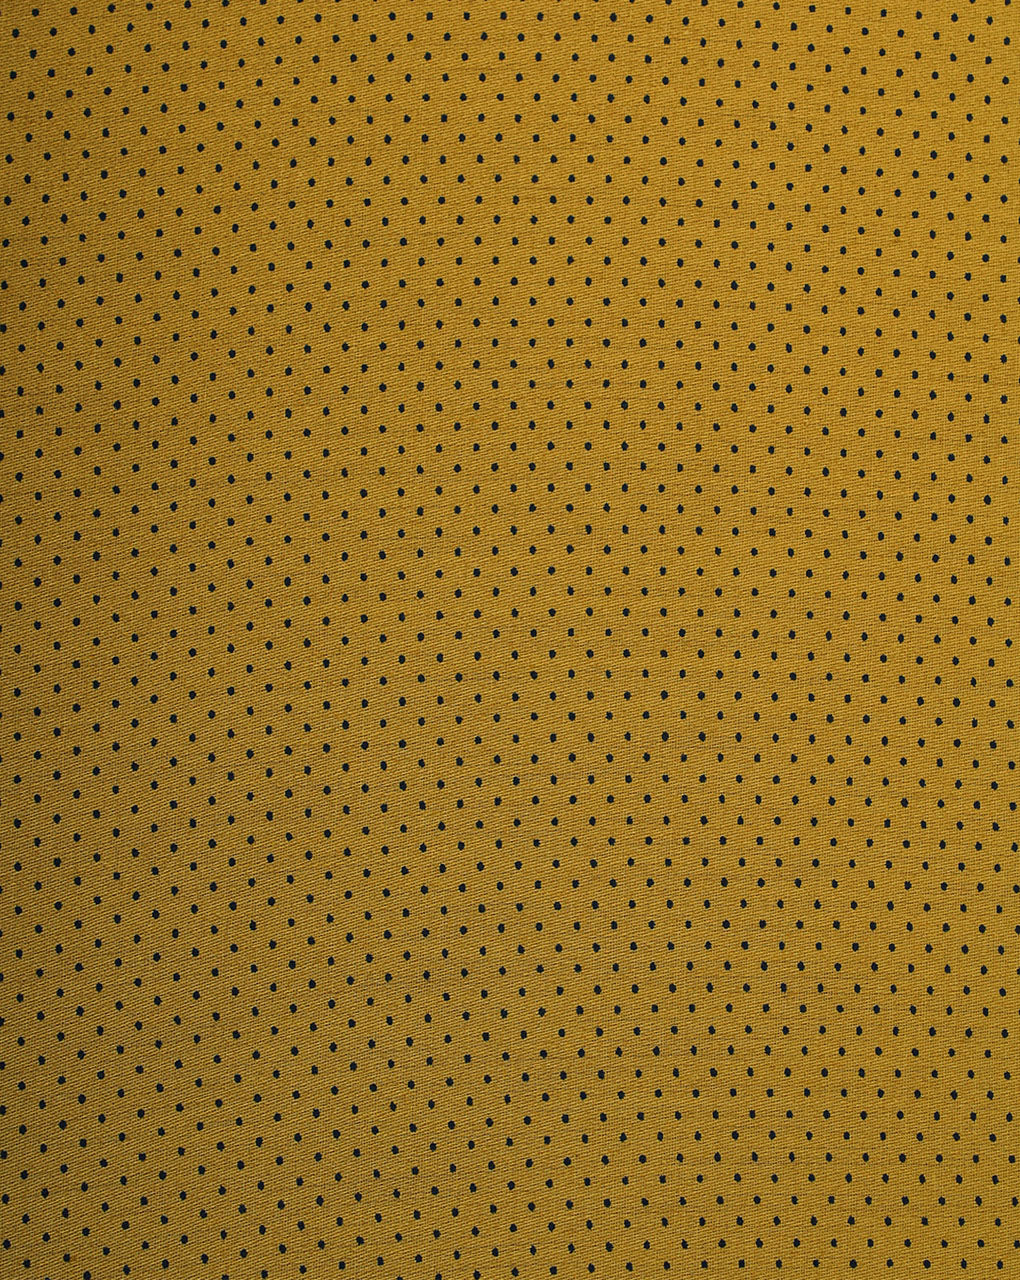 Yellow And Black Polka Dot Design Cotton Print Fabric